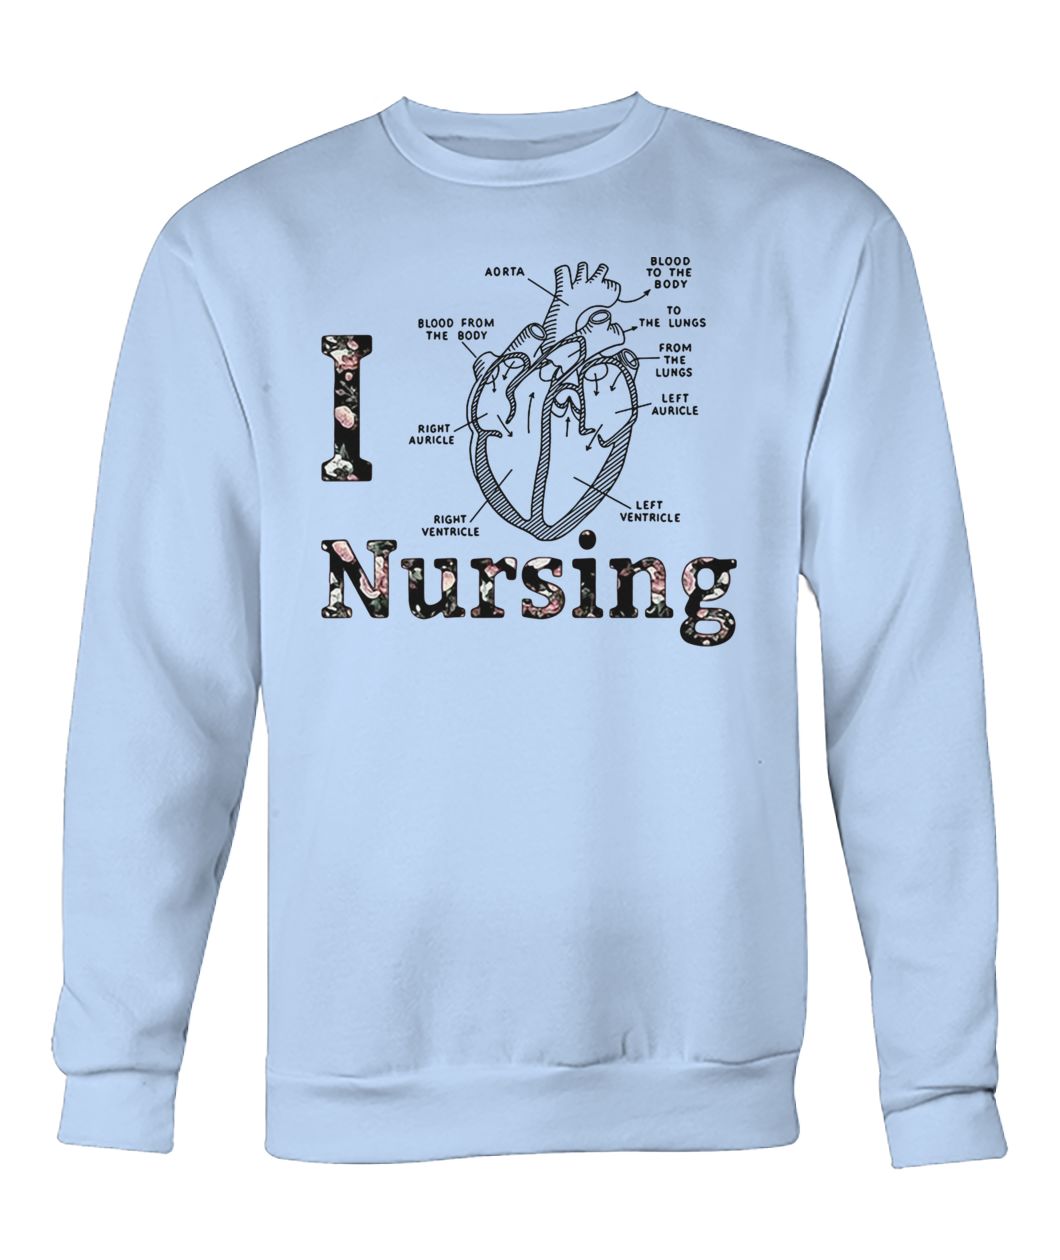 Heart anatomy medical I love nursing crew neck sweatshirt